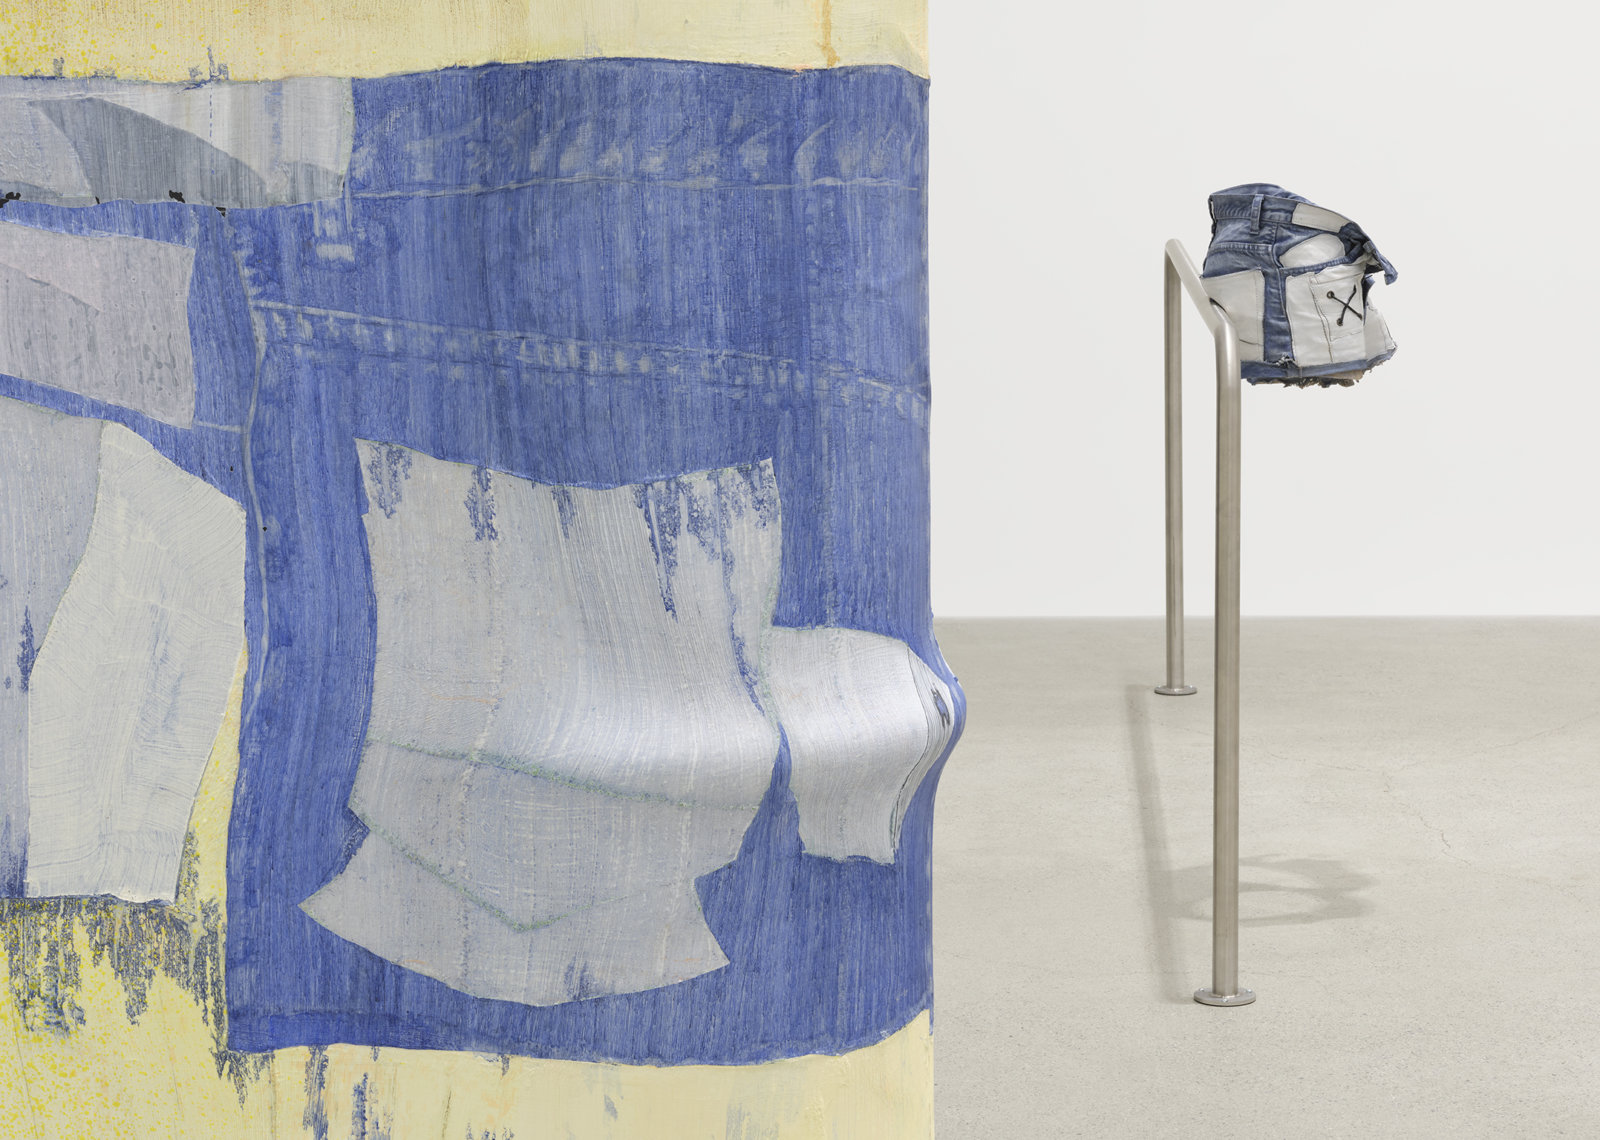 Valérie Blass, L’homme augmenté (detail), 2019, pvc pipe, heat-shrink tubing, acrylic paint, 117 x 15 x 12 in. (296 x 38 x 24 cm)